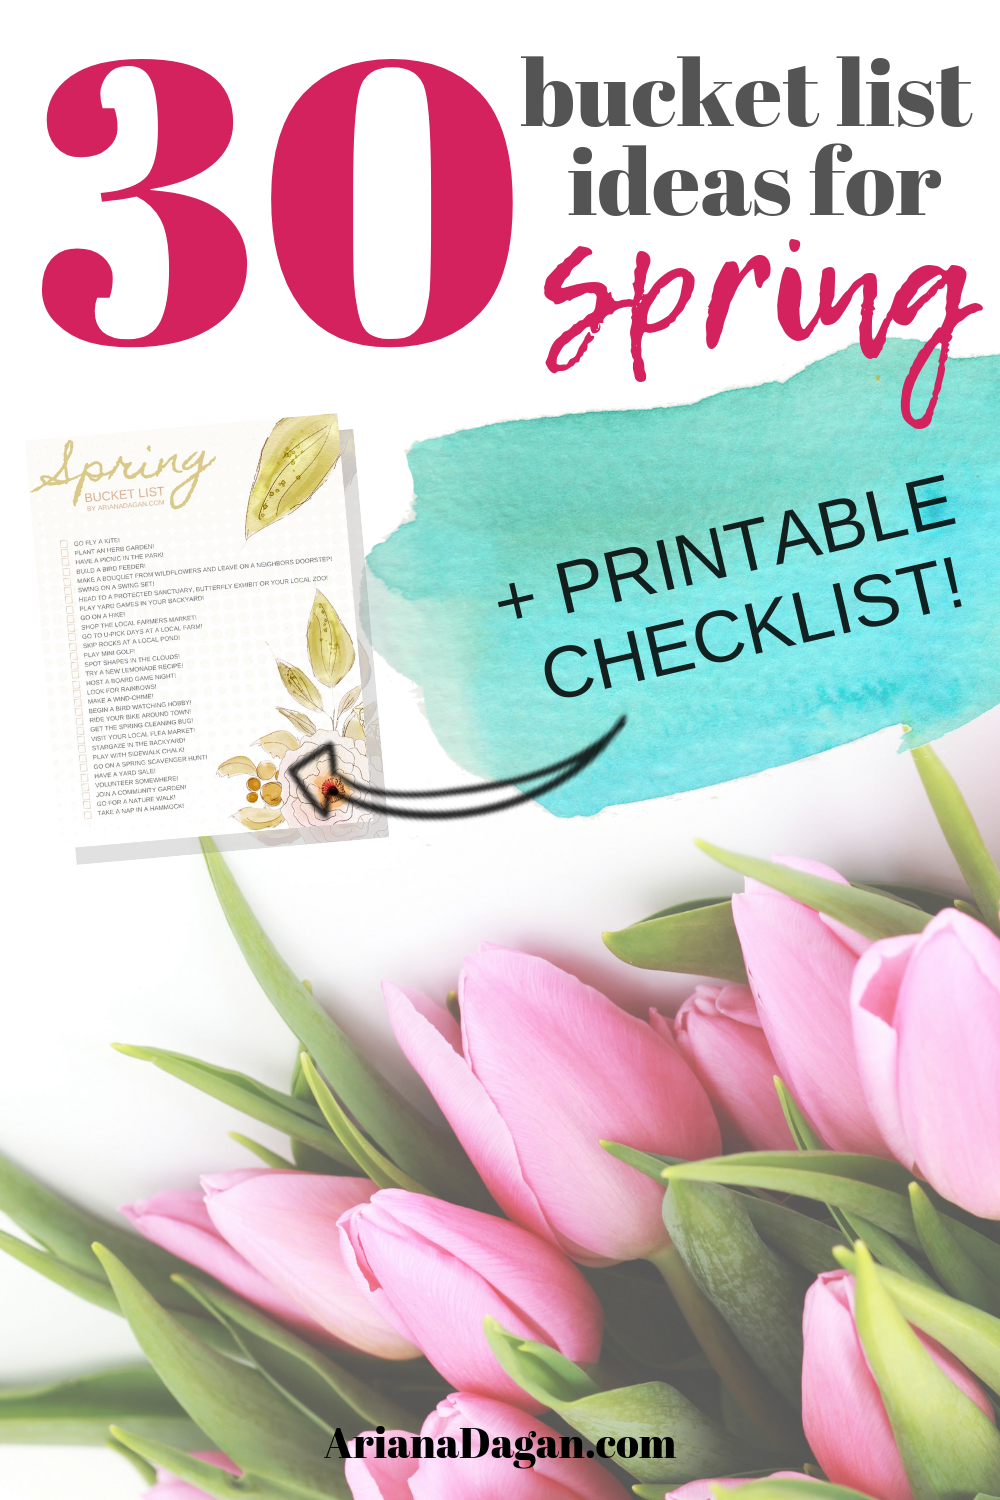 30 Bucket List Ideas for Spring by Ariana Dagan